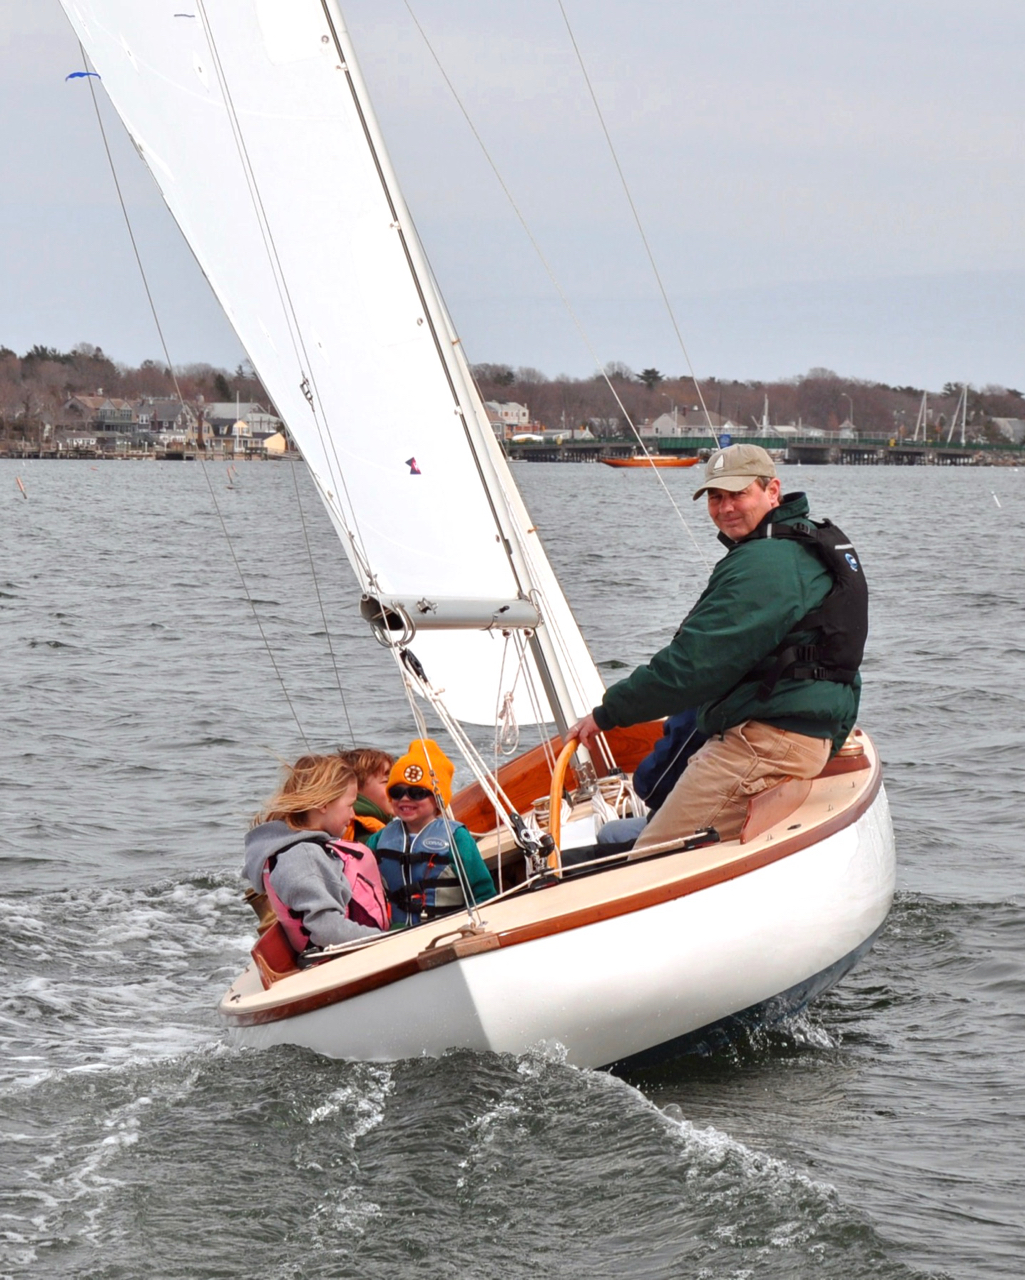 sakonnet 23 sailboat review